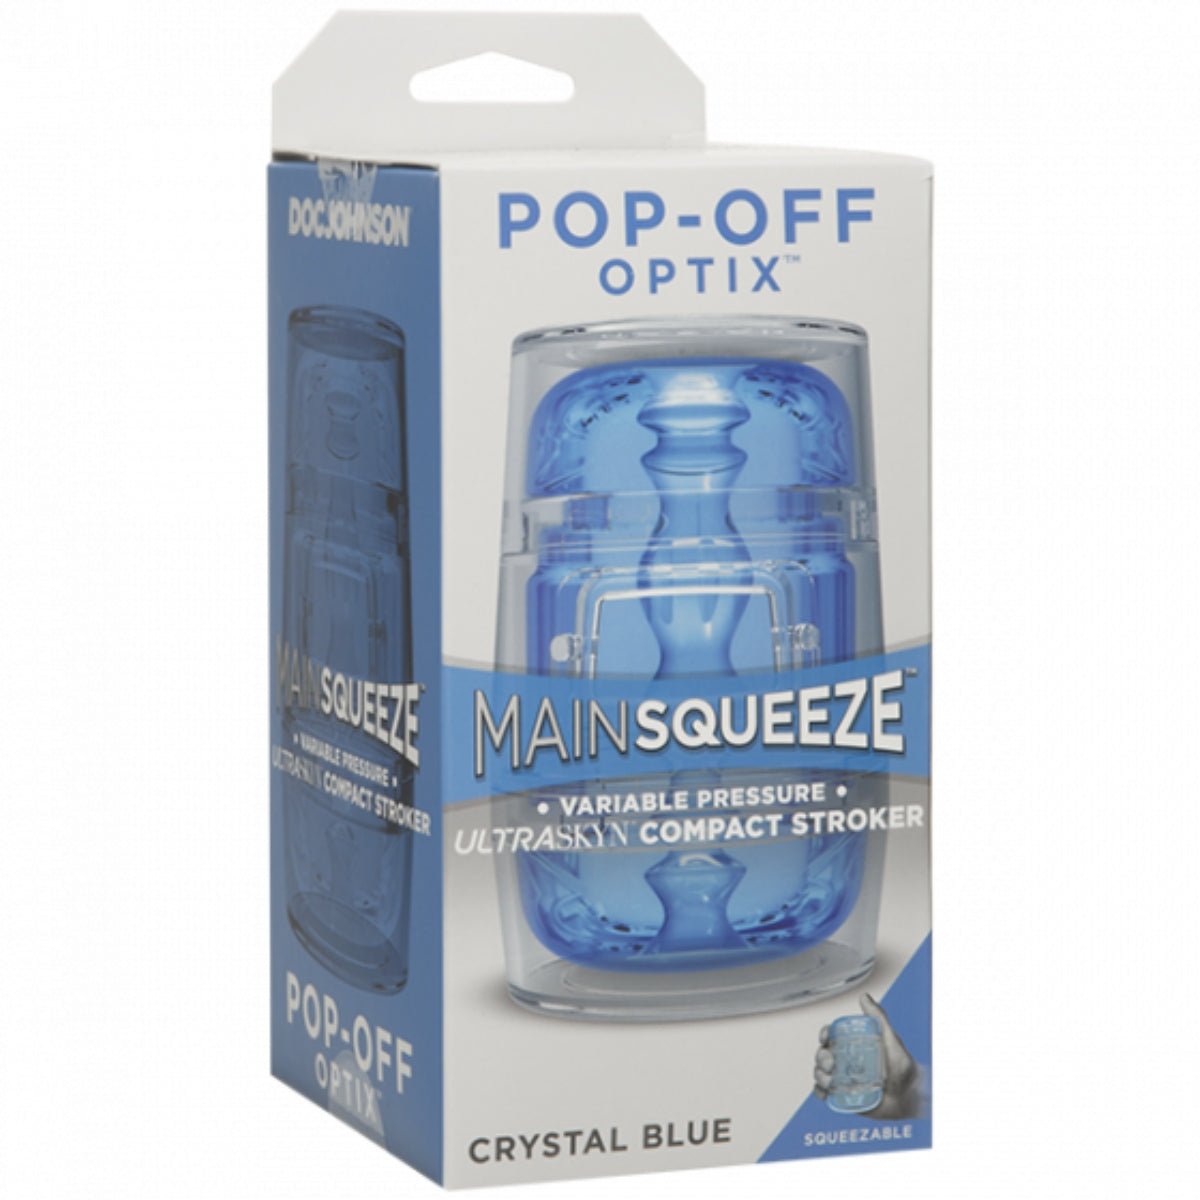 Main Squeeze Pop Off Optix Ultraskyn Compact Stroker Crystal Blue